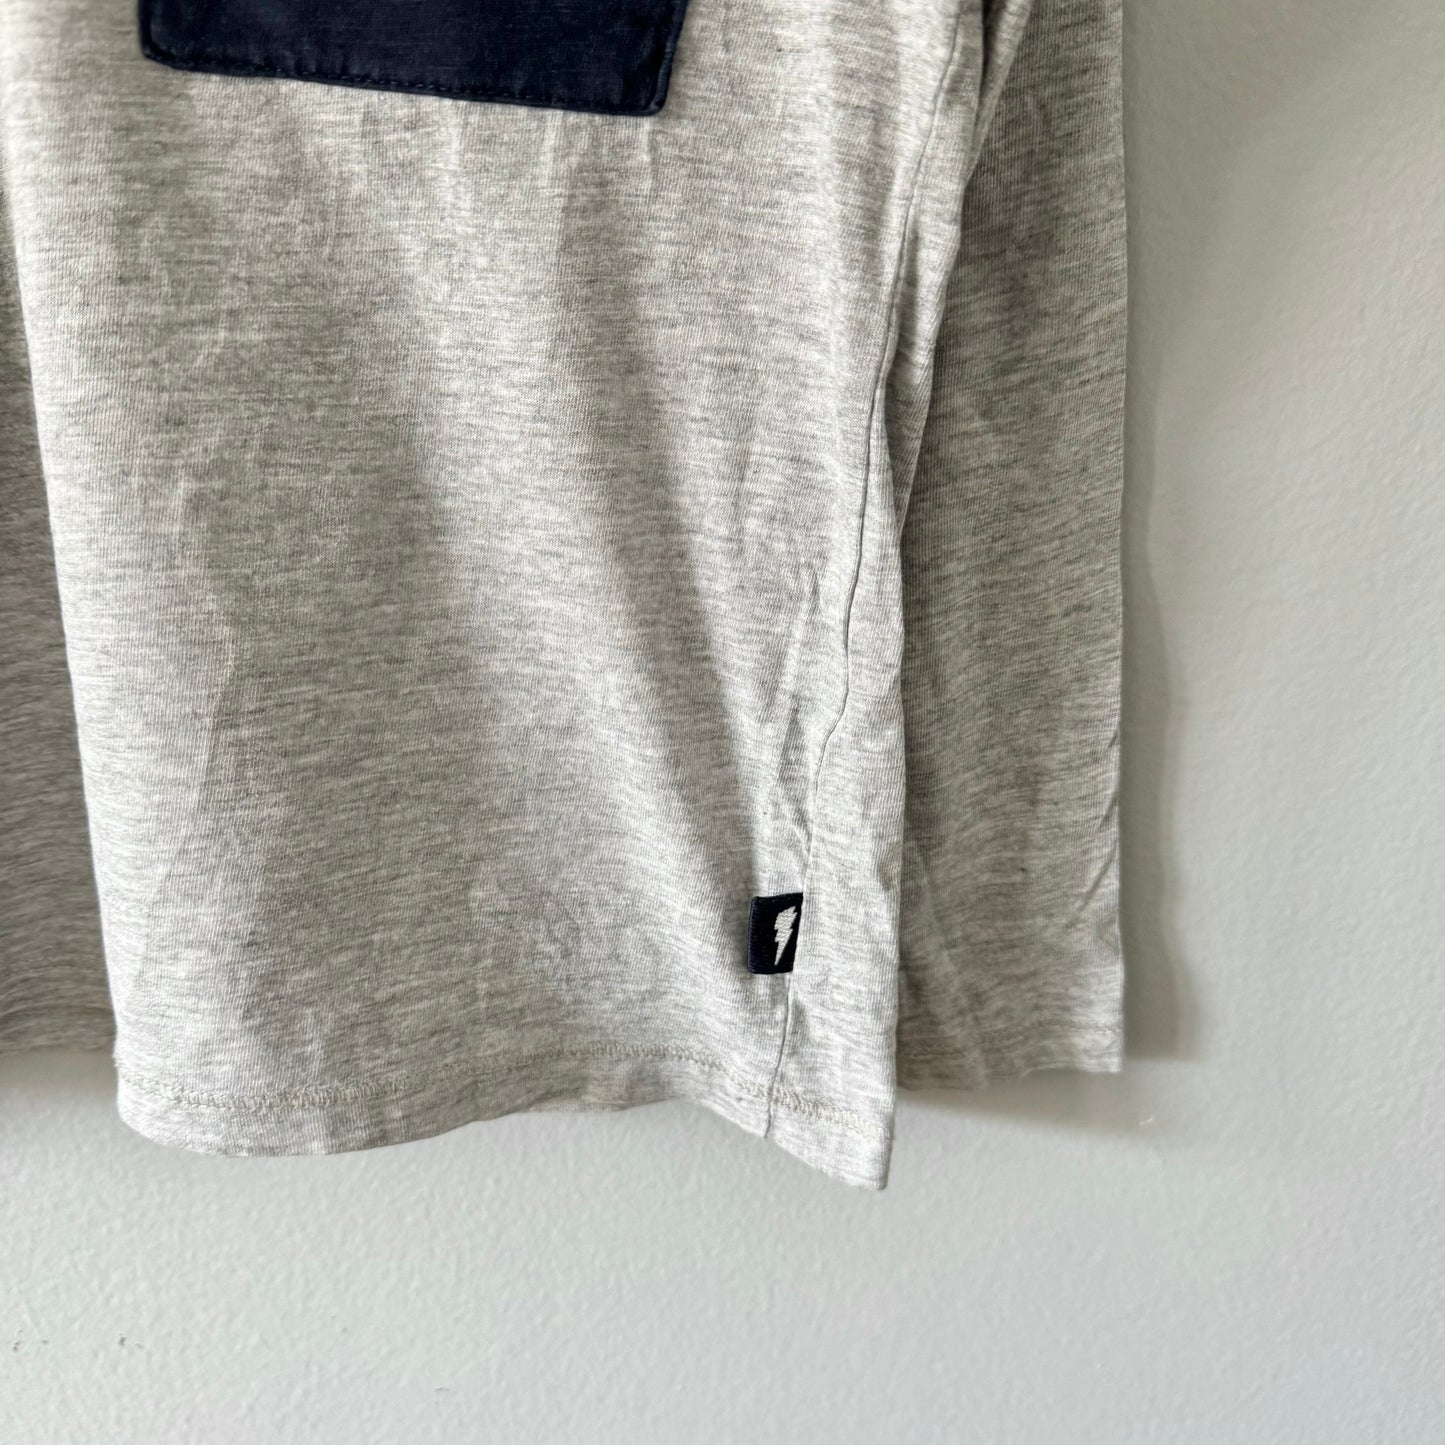 Zara / Light grey long sleeve T-shirt / 6Y